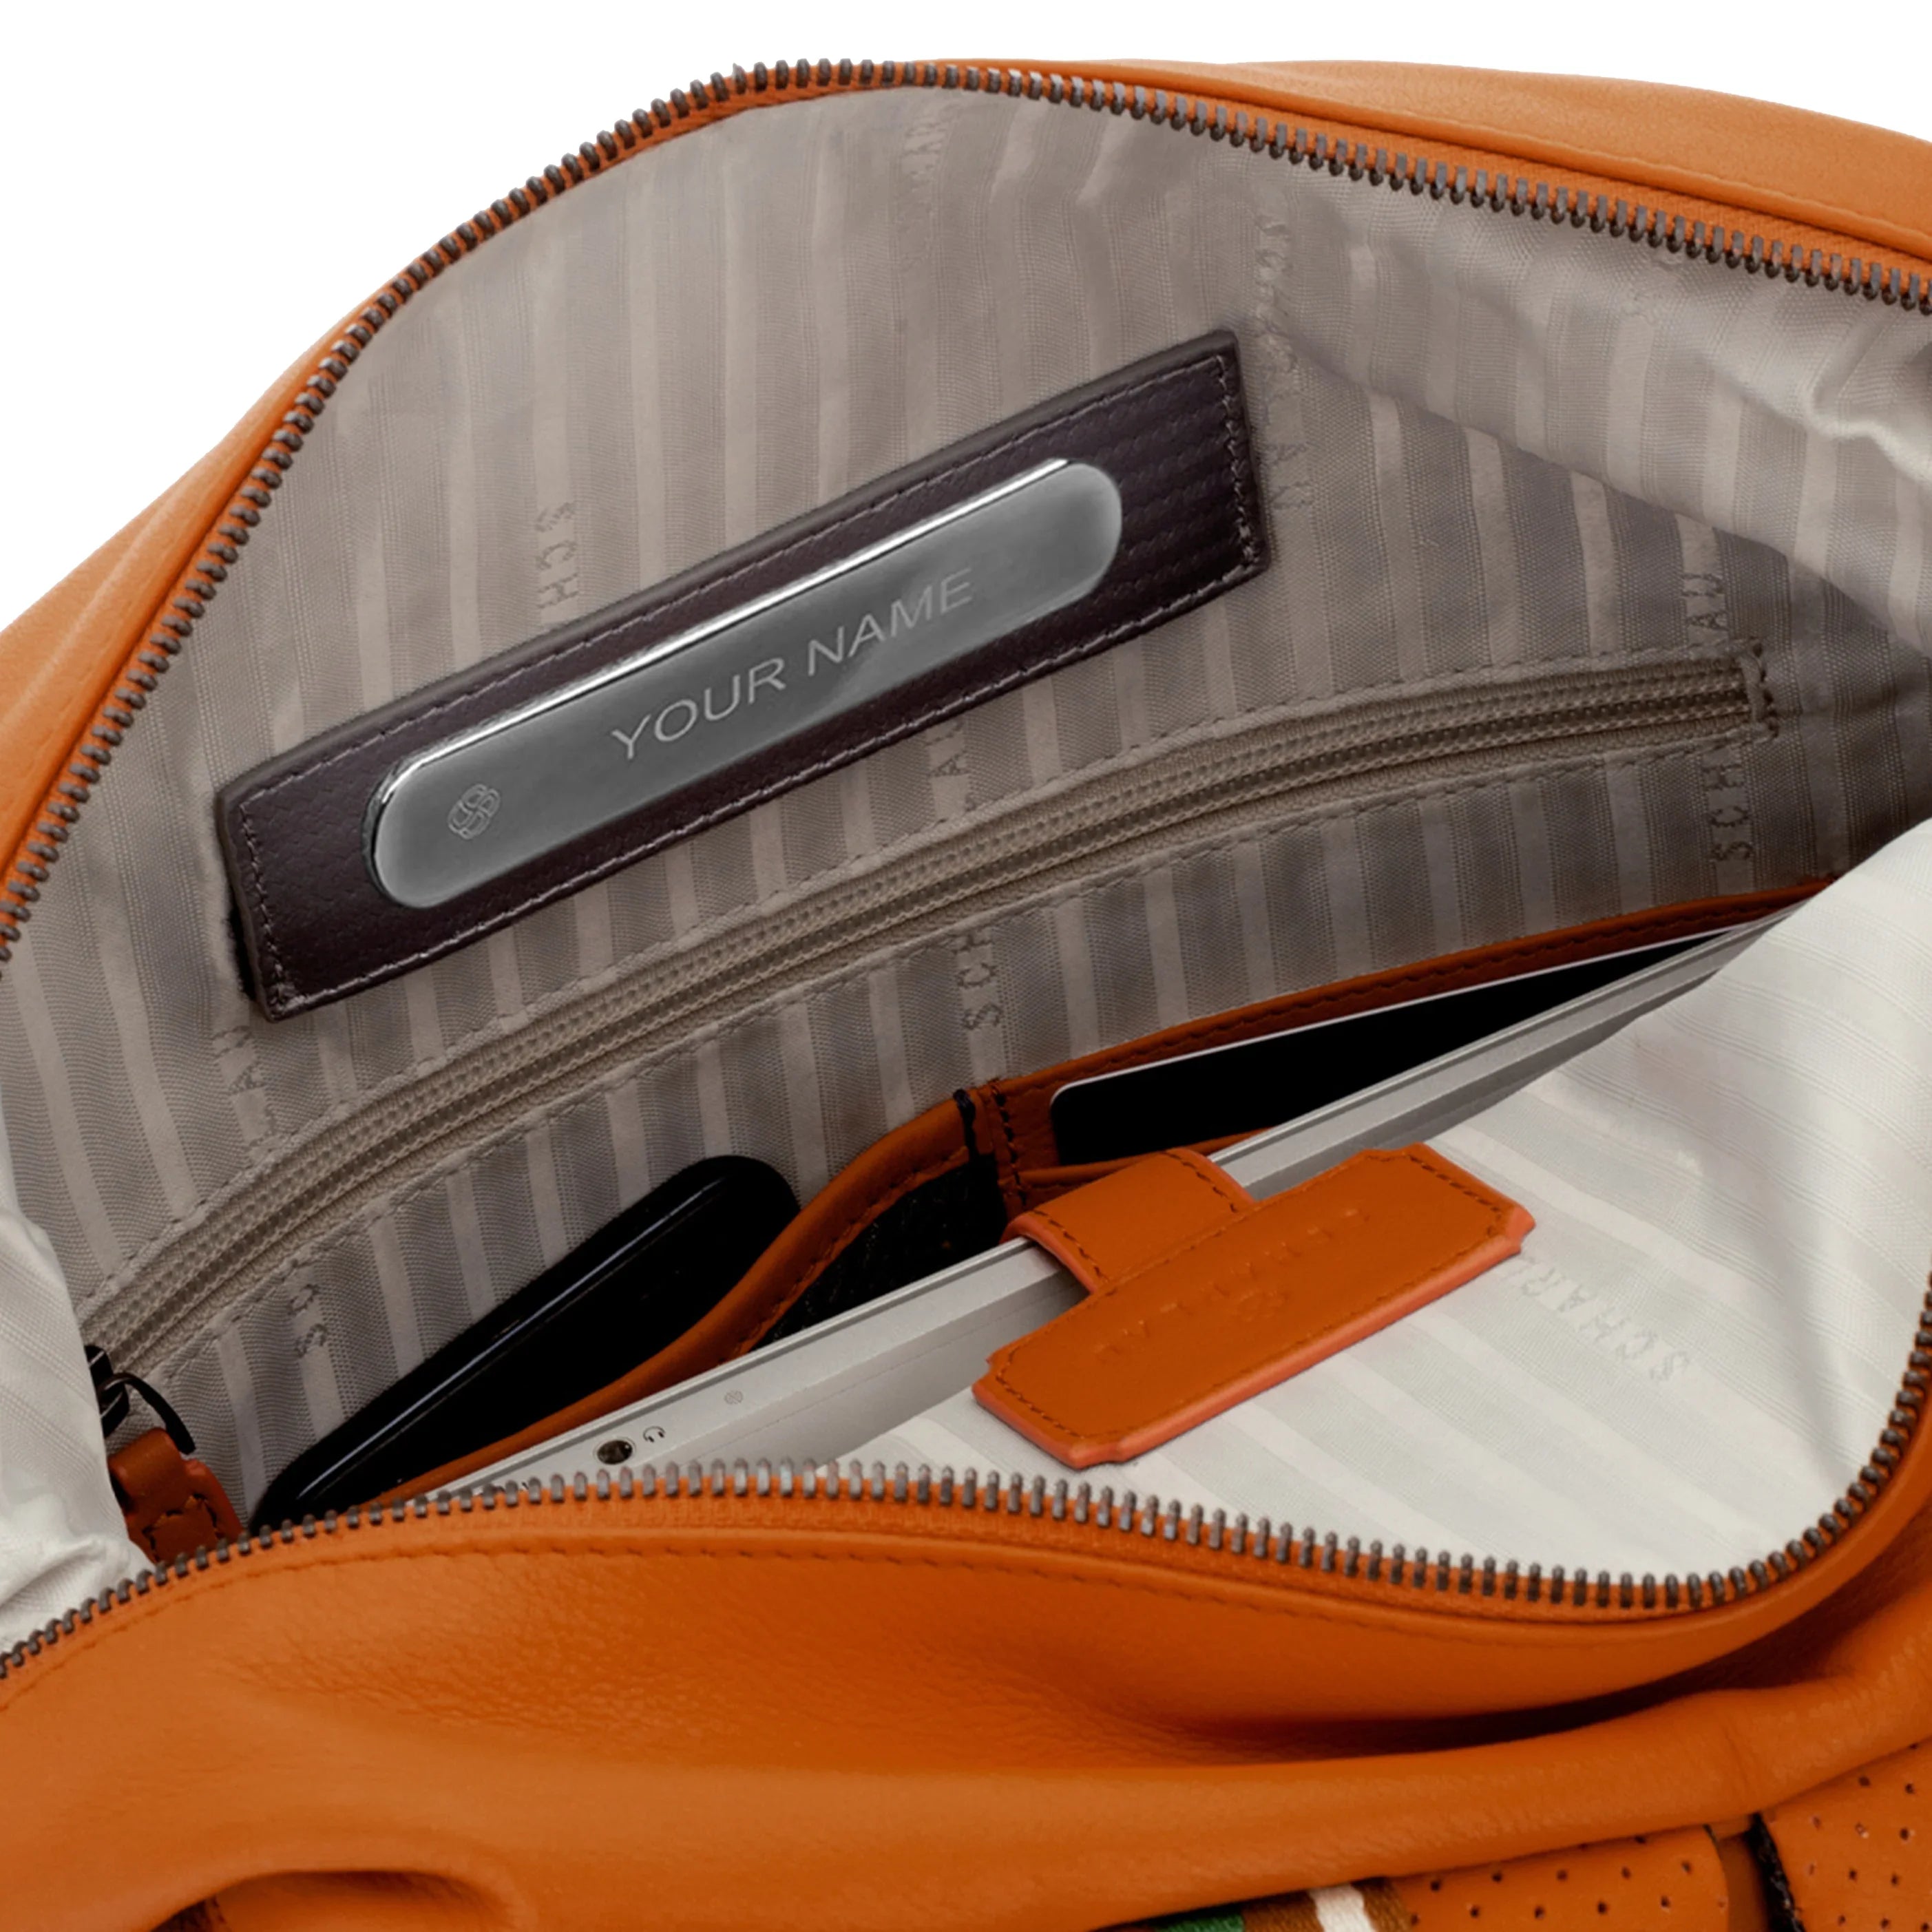 Scharlau Slackline Blondin Backpack 42 cm - Orange